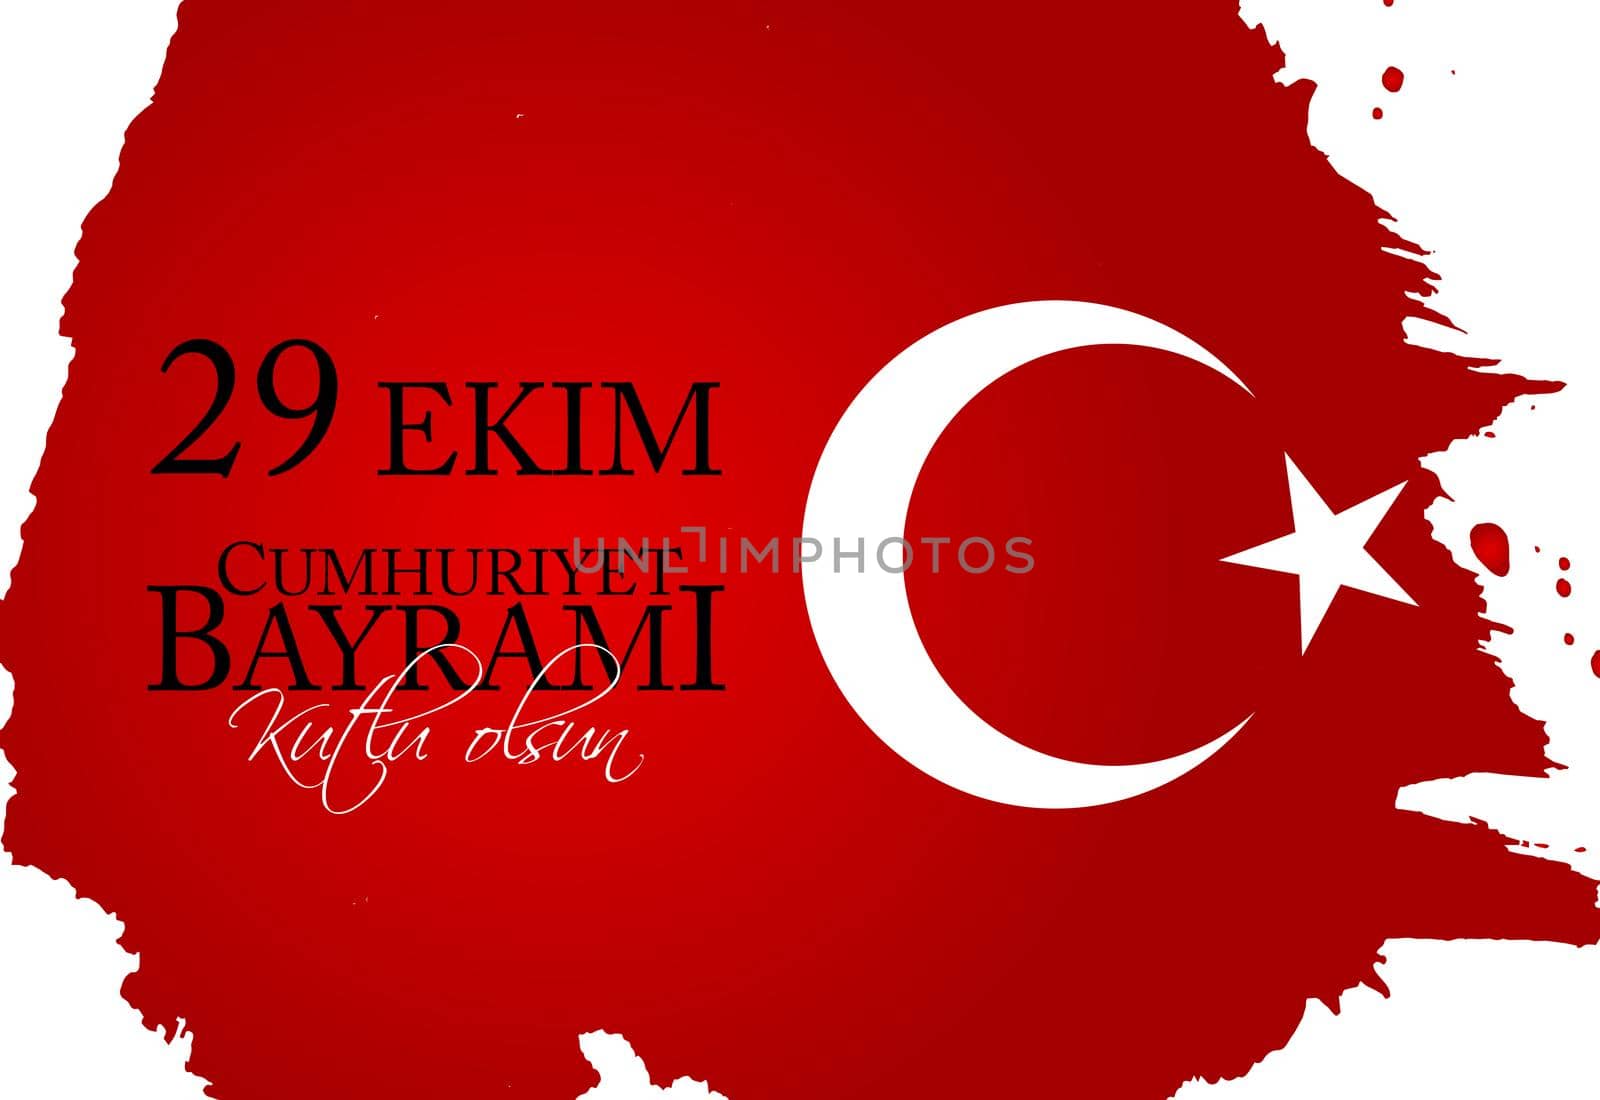 29 Ekim Cumhuriyet Bayrami kutlu olsun. Translation: 29 october Republic Day Turkey and the National Day in Turkey, Happy holiday. Vector Illustration EPS10